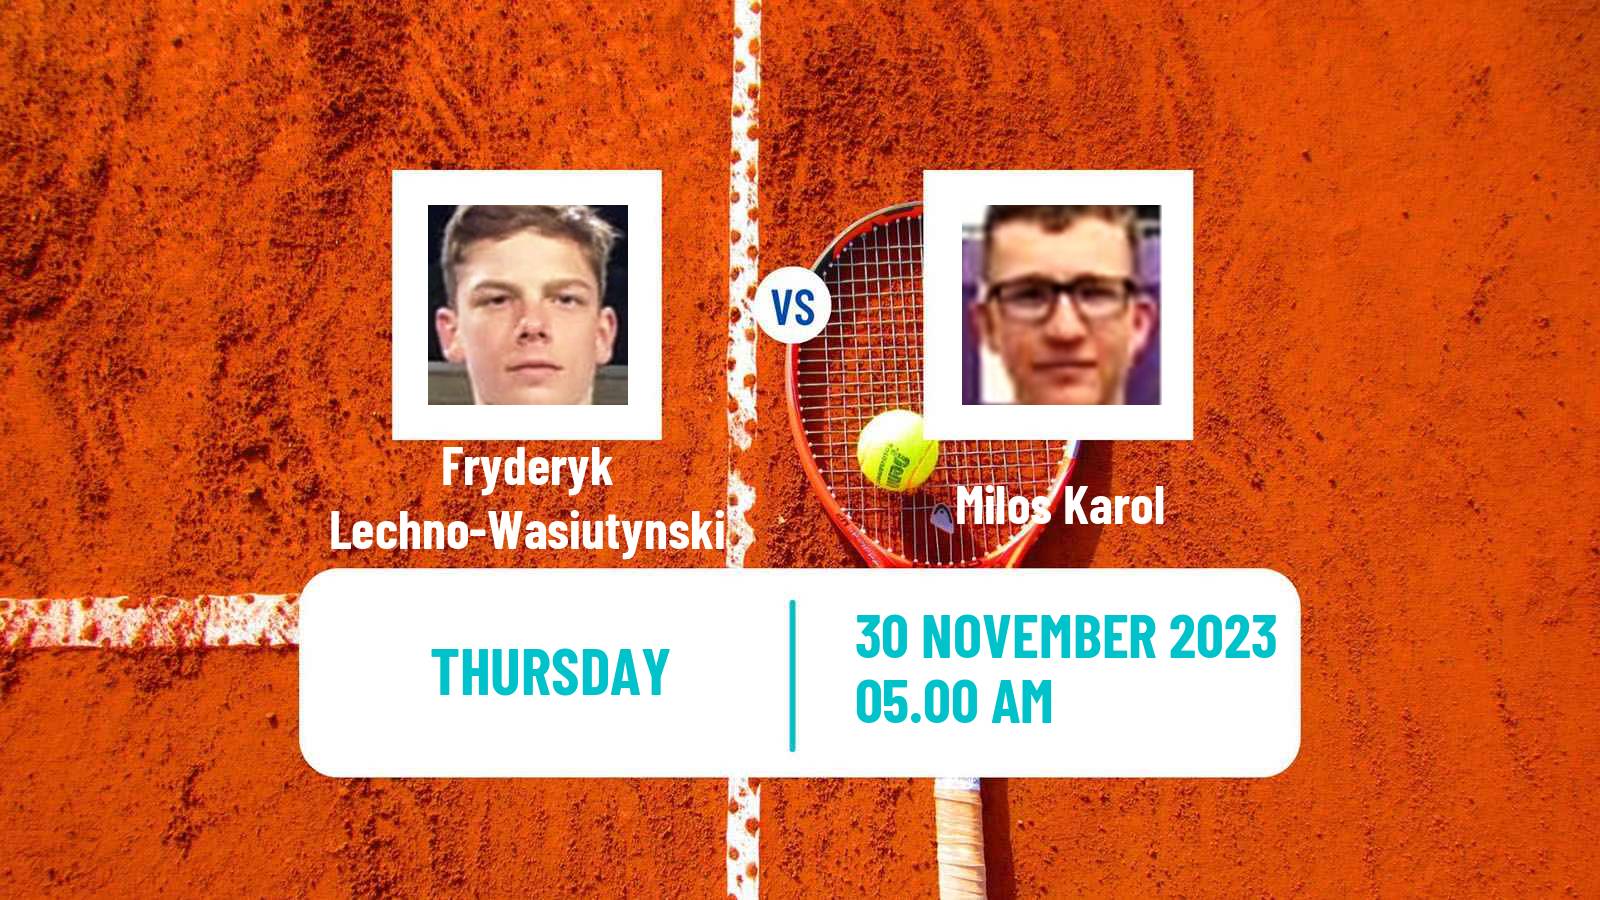 Tennis ITF M15 Monastir 48 Men Fryderyk Lechno-Wasiutynski - Milos Karol